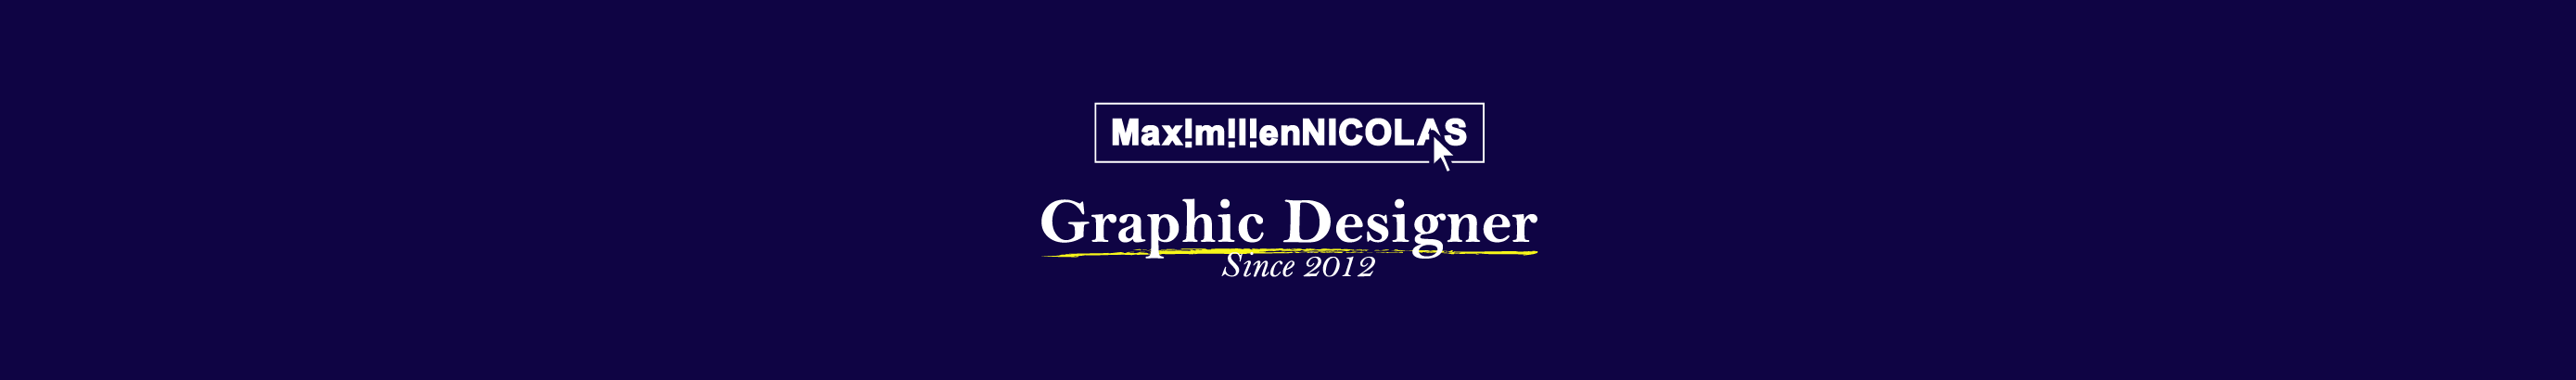 Maximilien Nicolas's profile banner